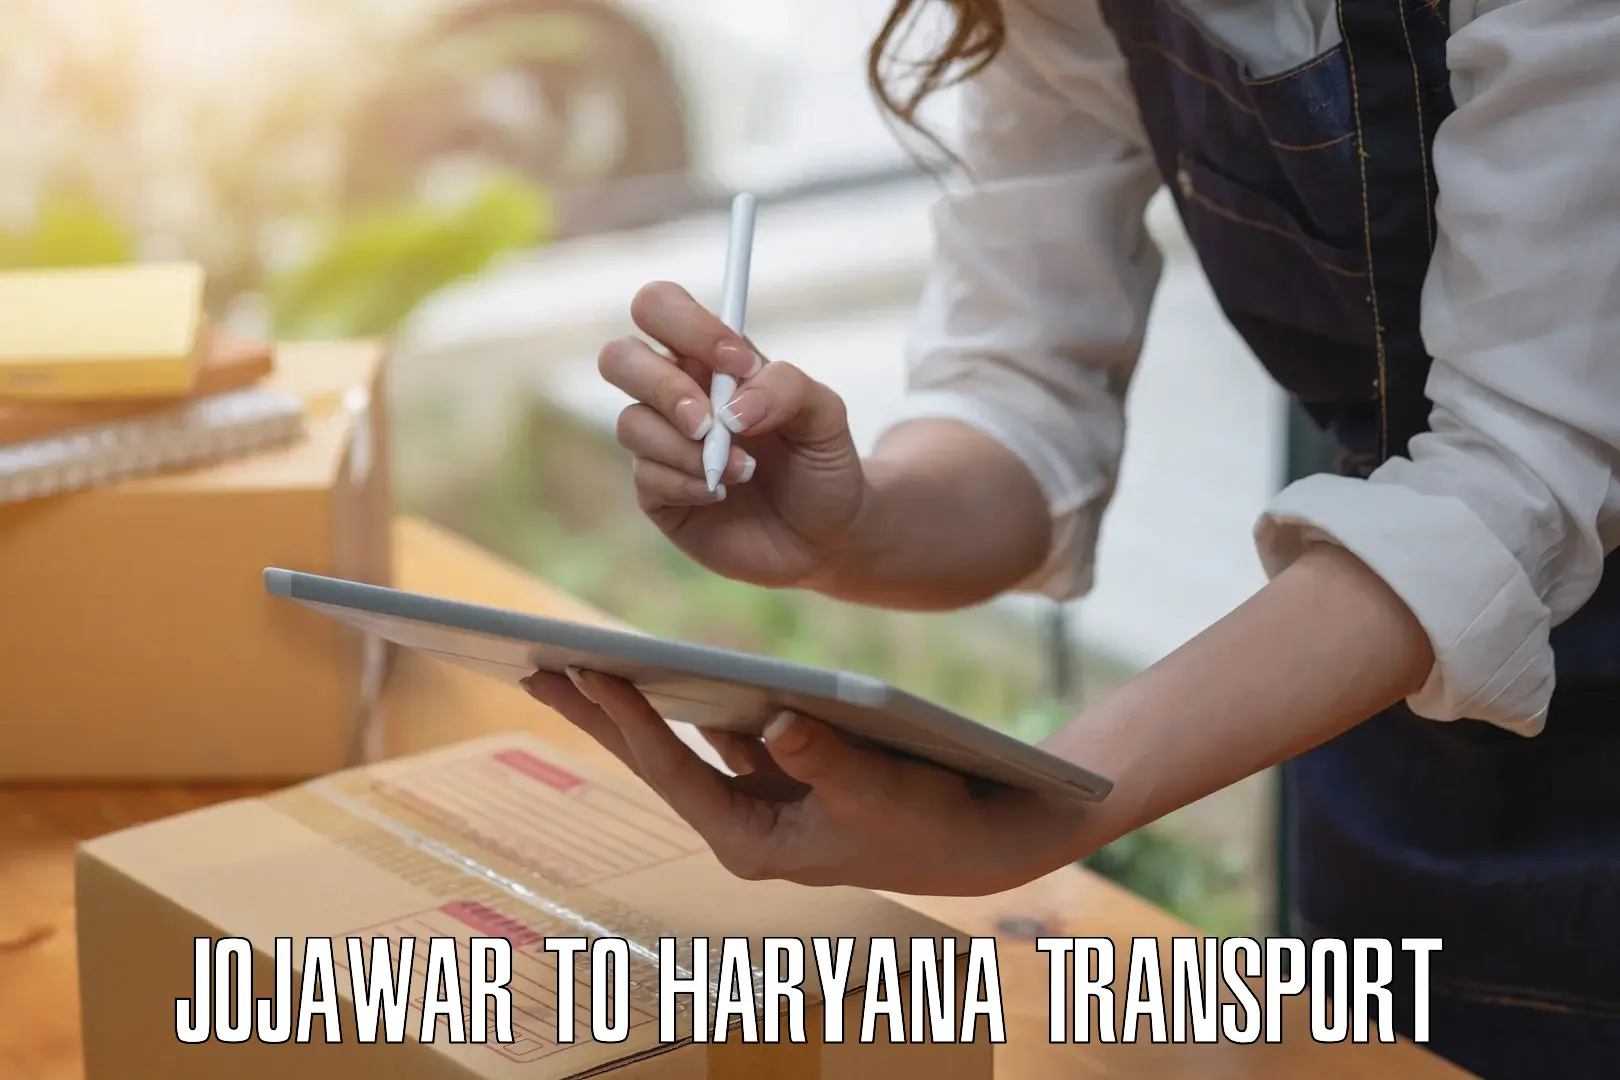 Commercial transport service in Jojawar to NCR Haryana